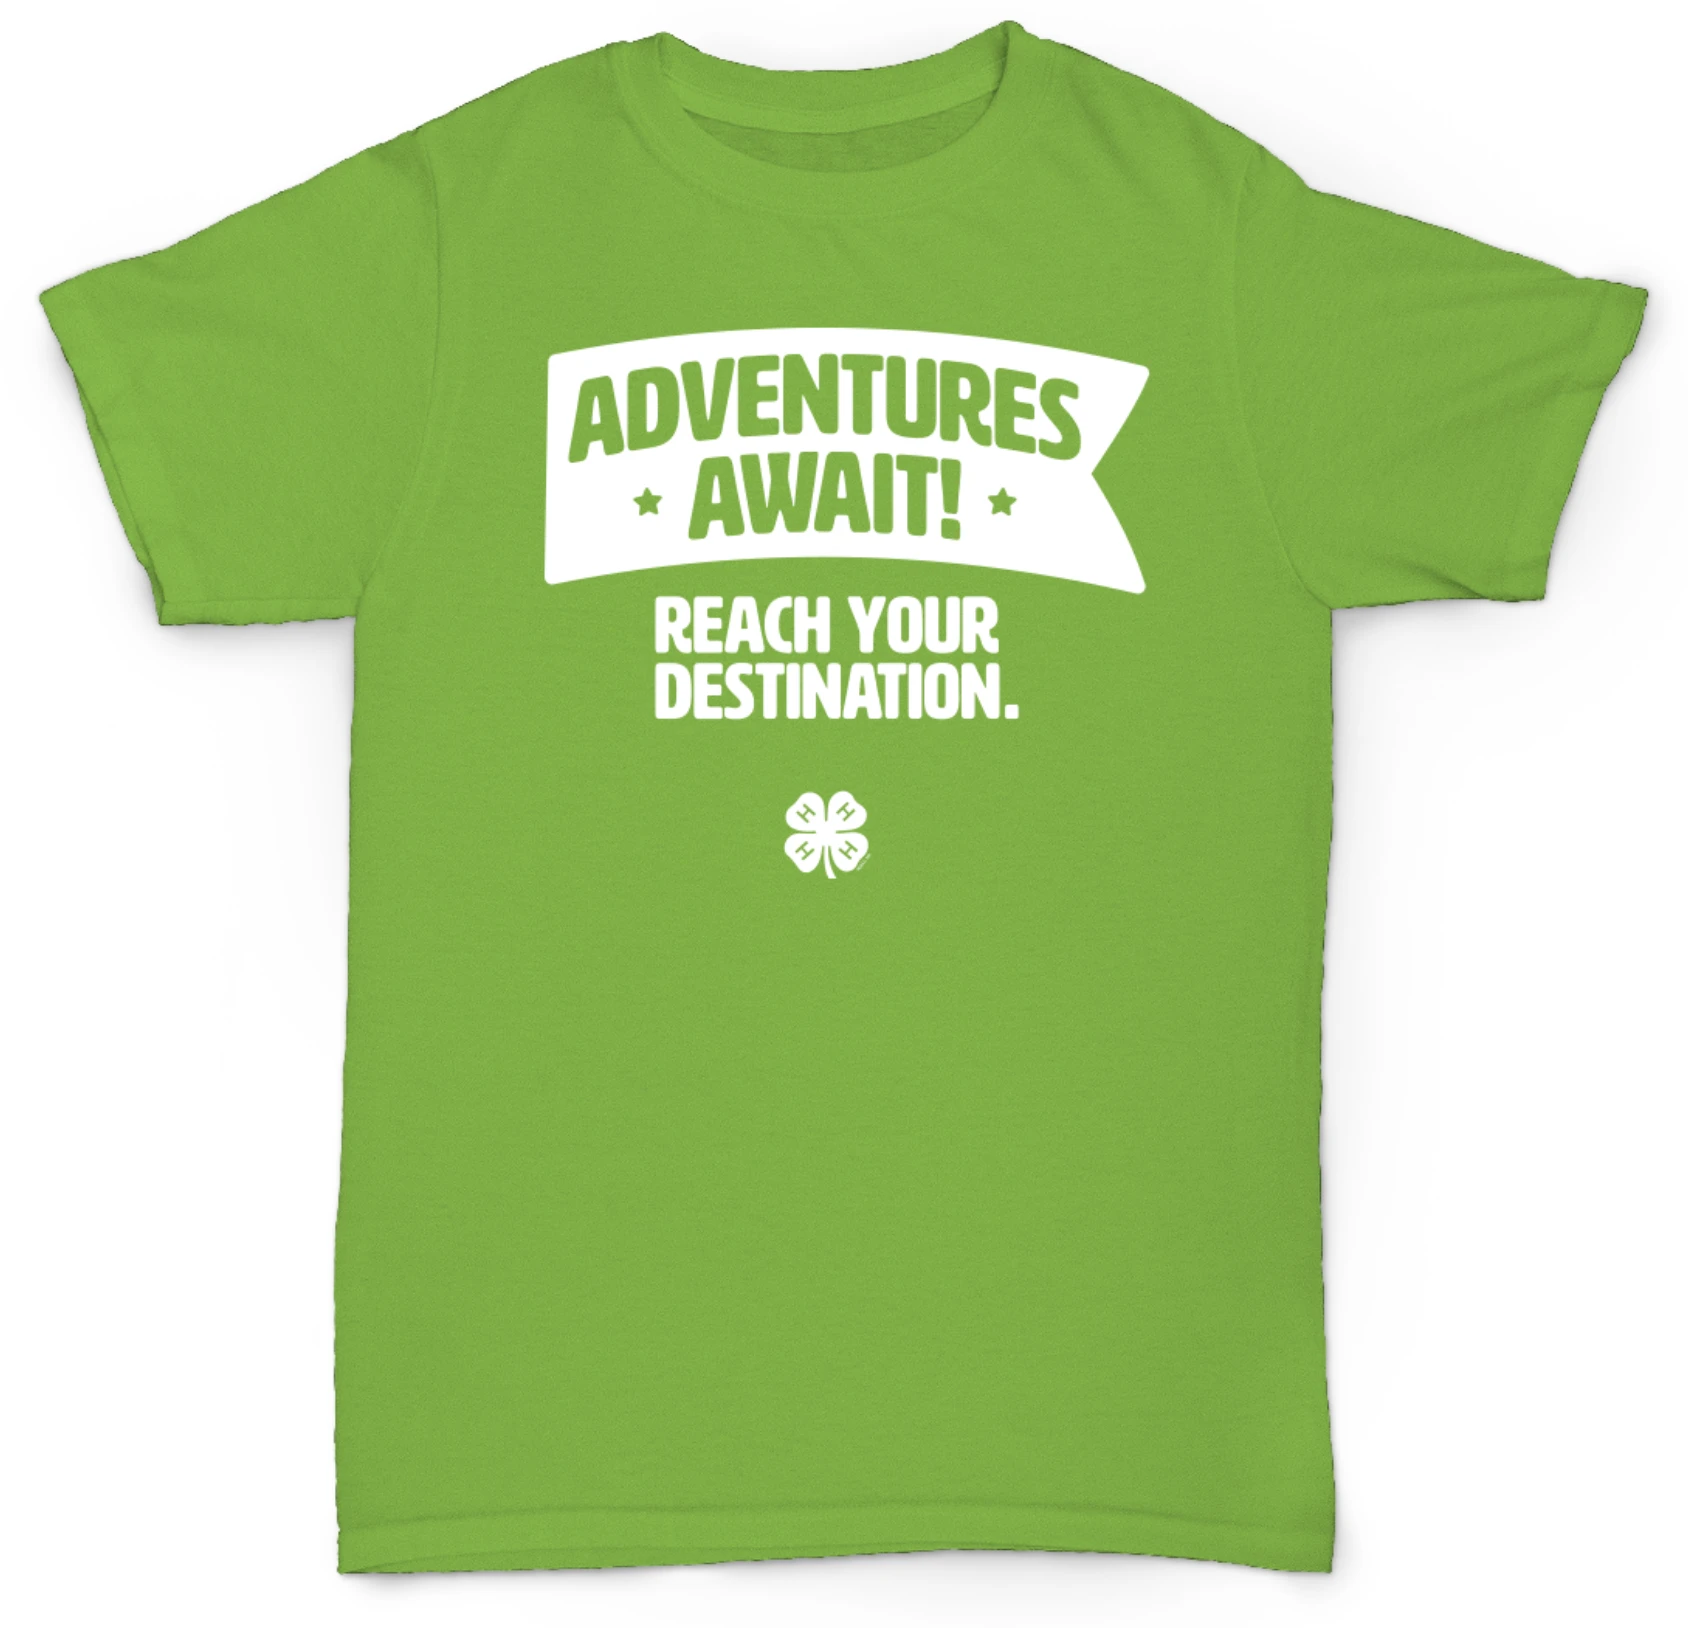 Adventures await reclaim your destiny t-shirt.